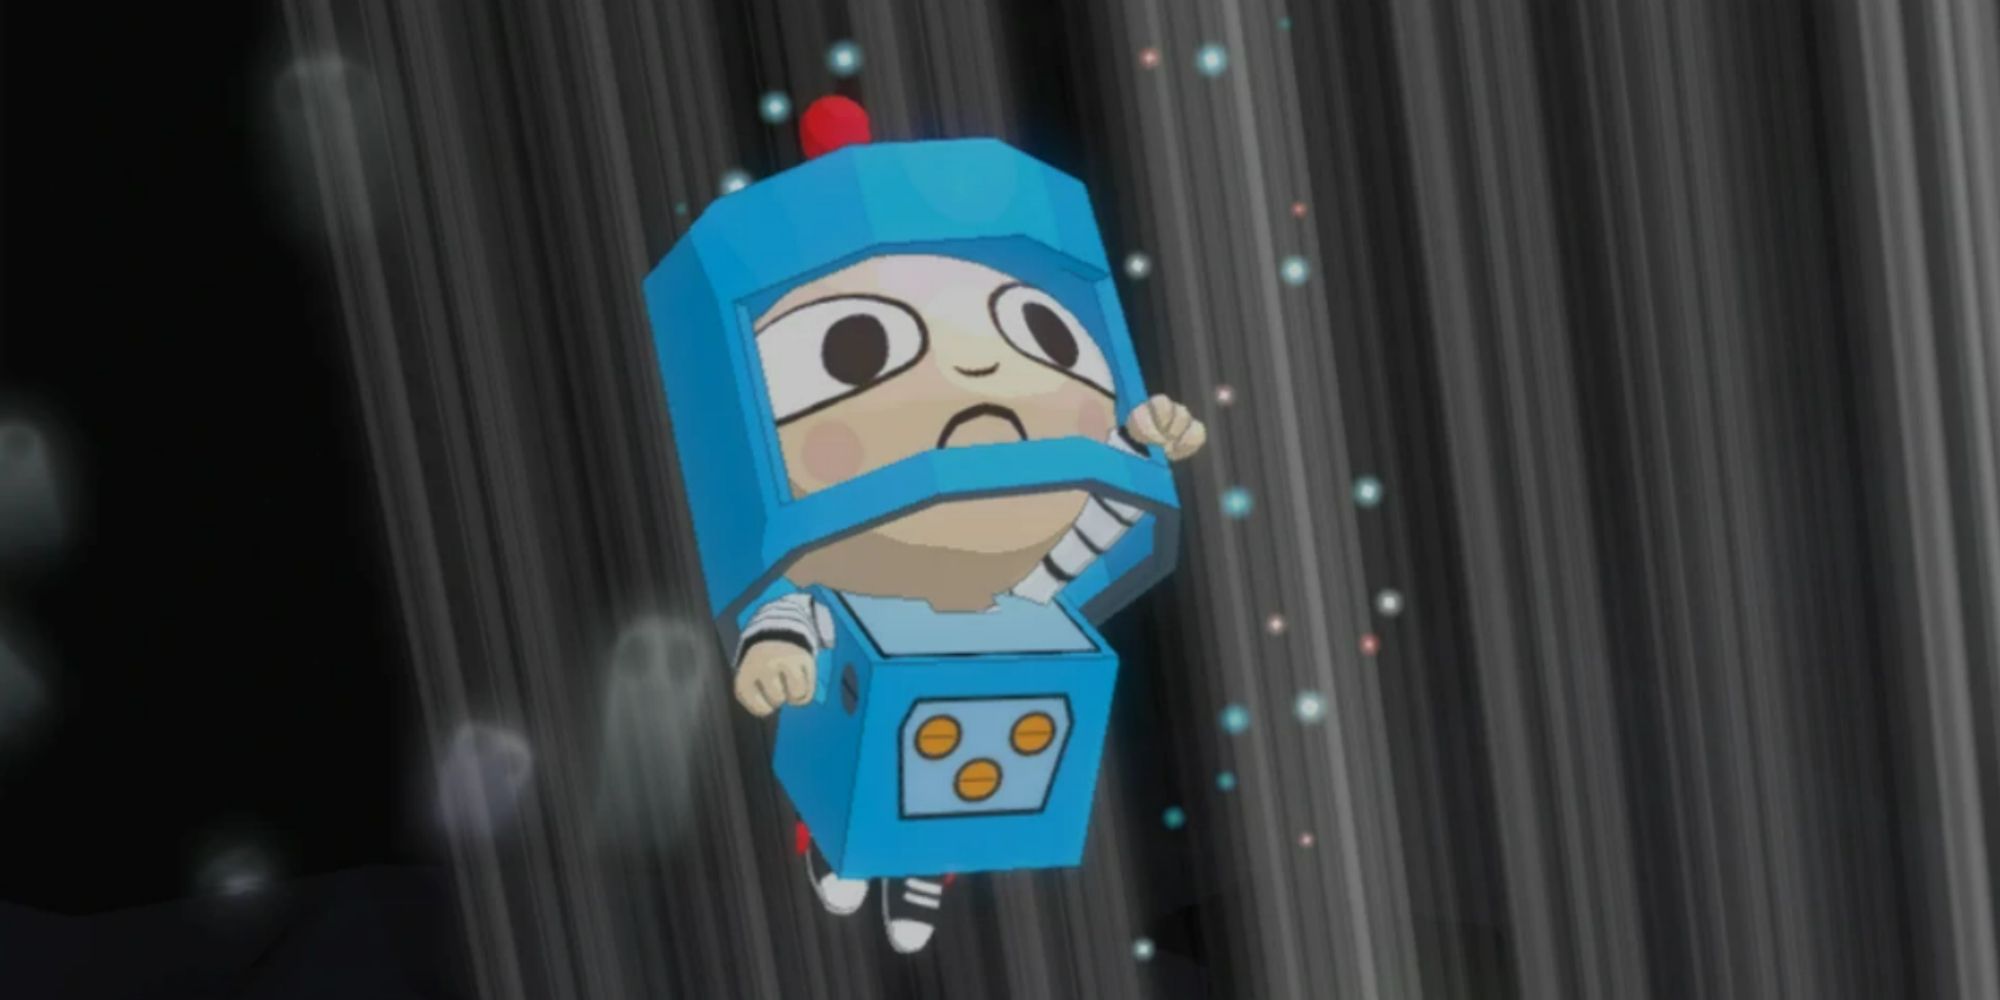 reynold wearing the blue robot costume in battle